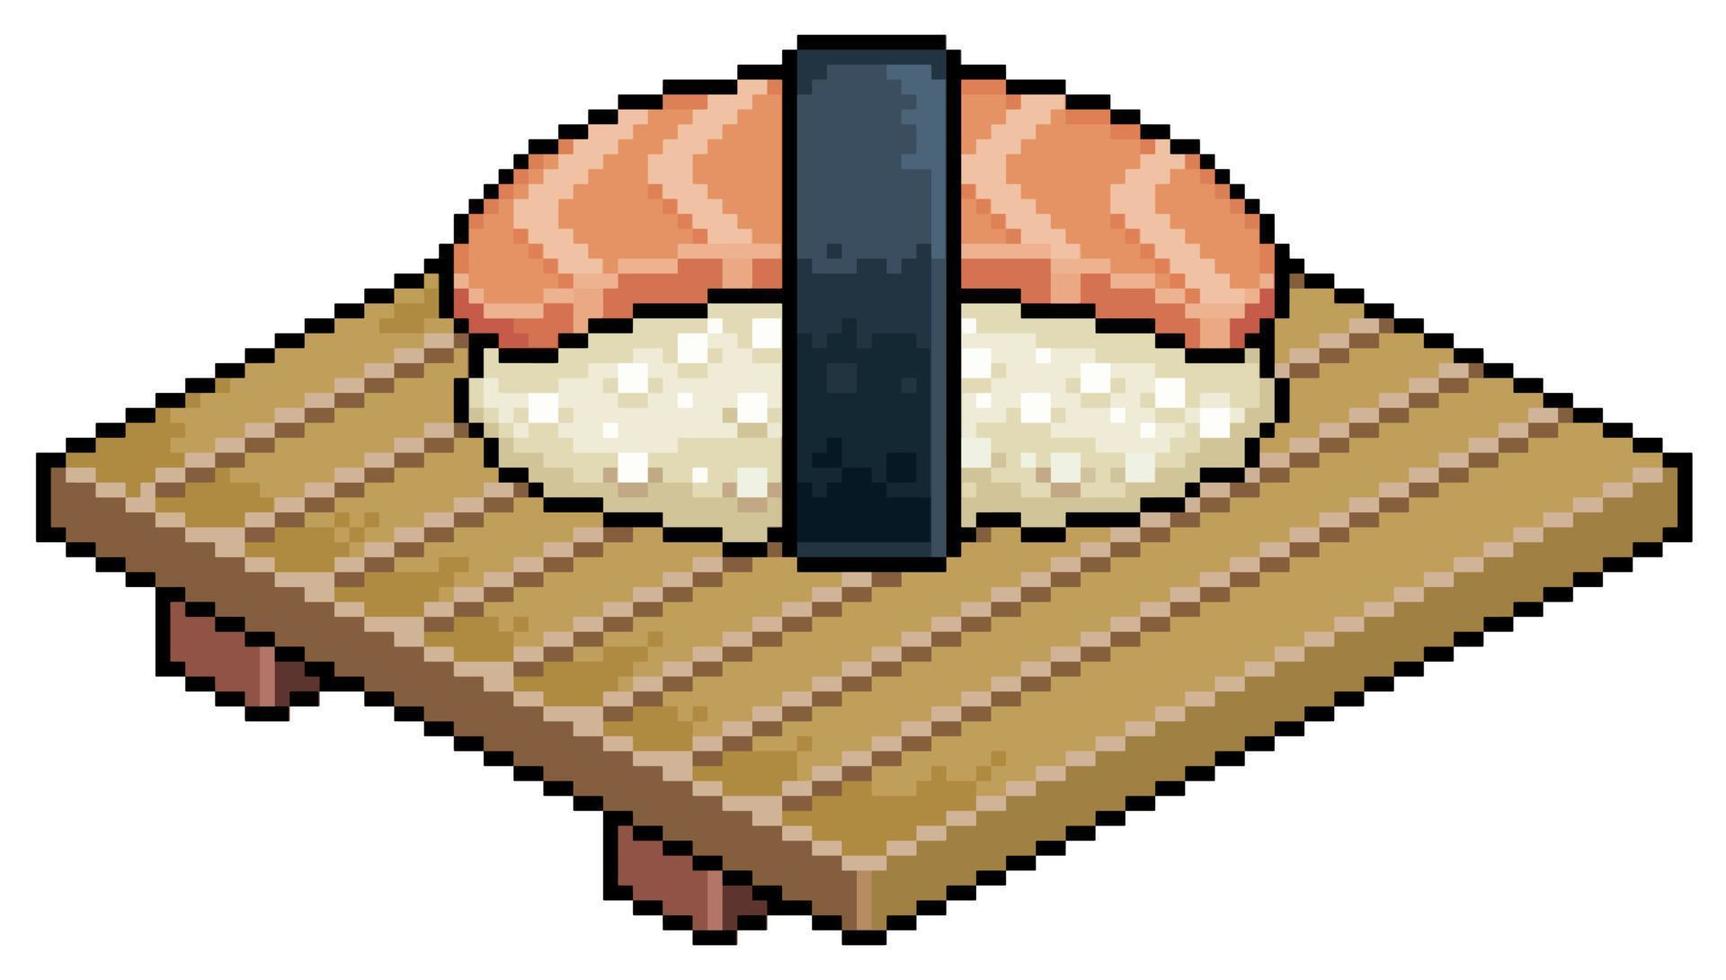 Pixel art sake nigiri on wooden board for sushi vector icon for 8bit game on white background